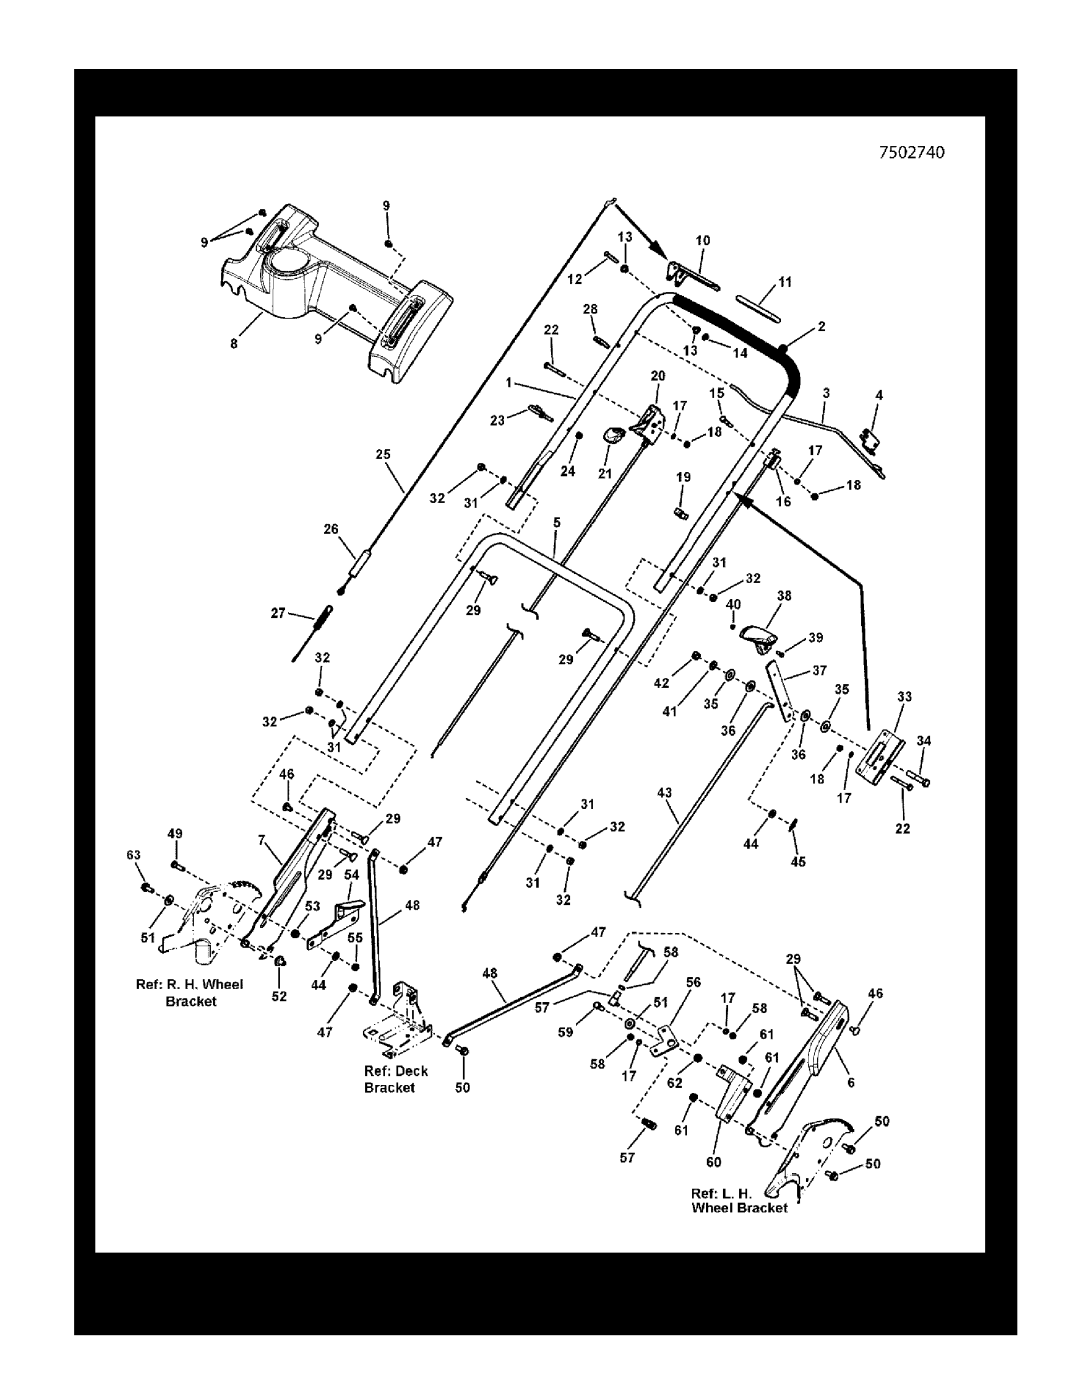 Briggs & Stratton 7800849 manual Reproduction, Handle Group, Manual No, 7106167, Steel Deck Walk Behind, Series 